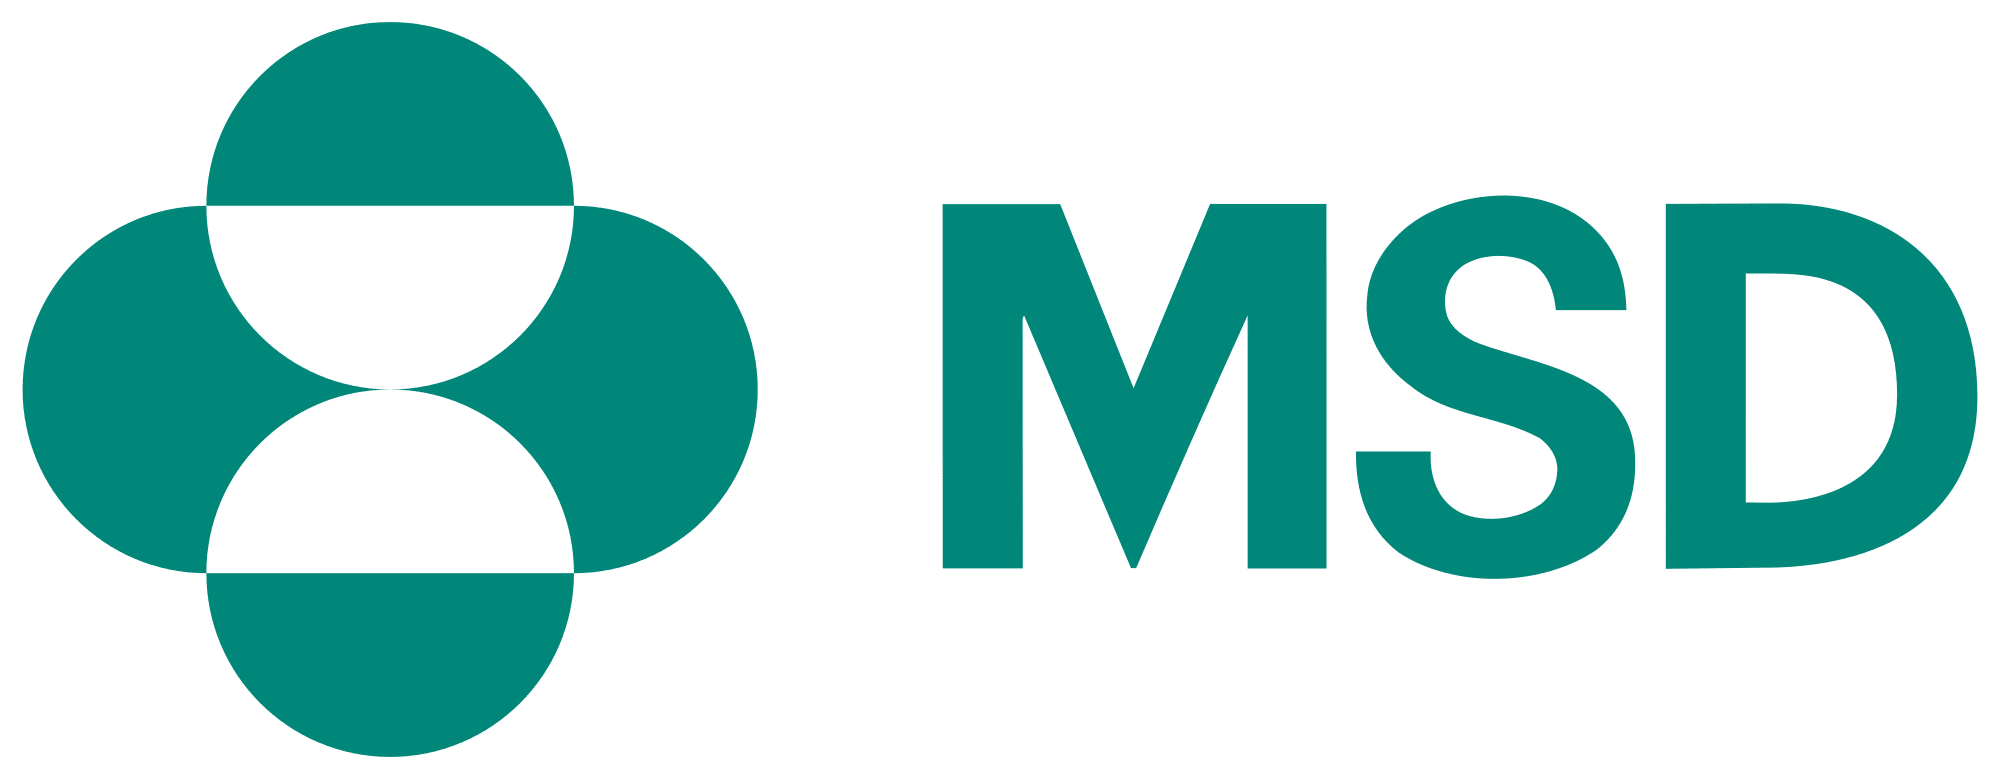 Msd справочник. Merck Sharp & Dohme лого. MSD логотип. Мерк логотип. Merck KGAA логотип.